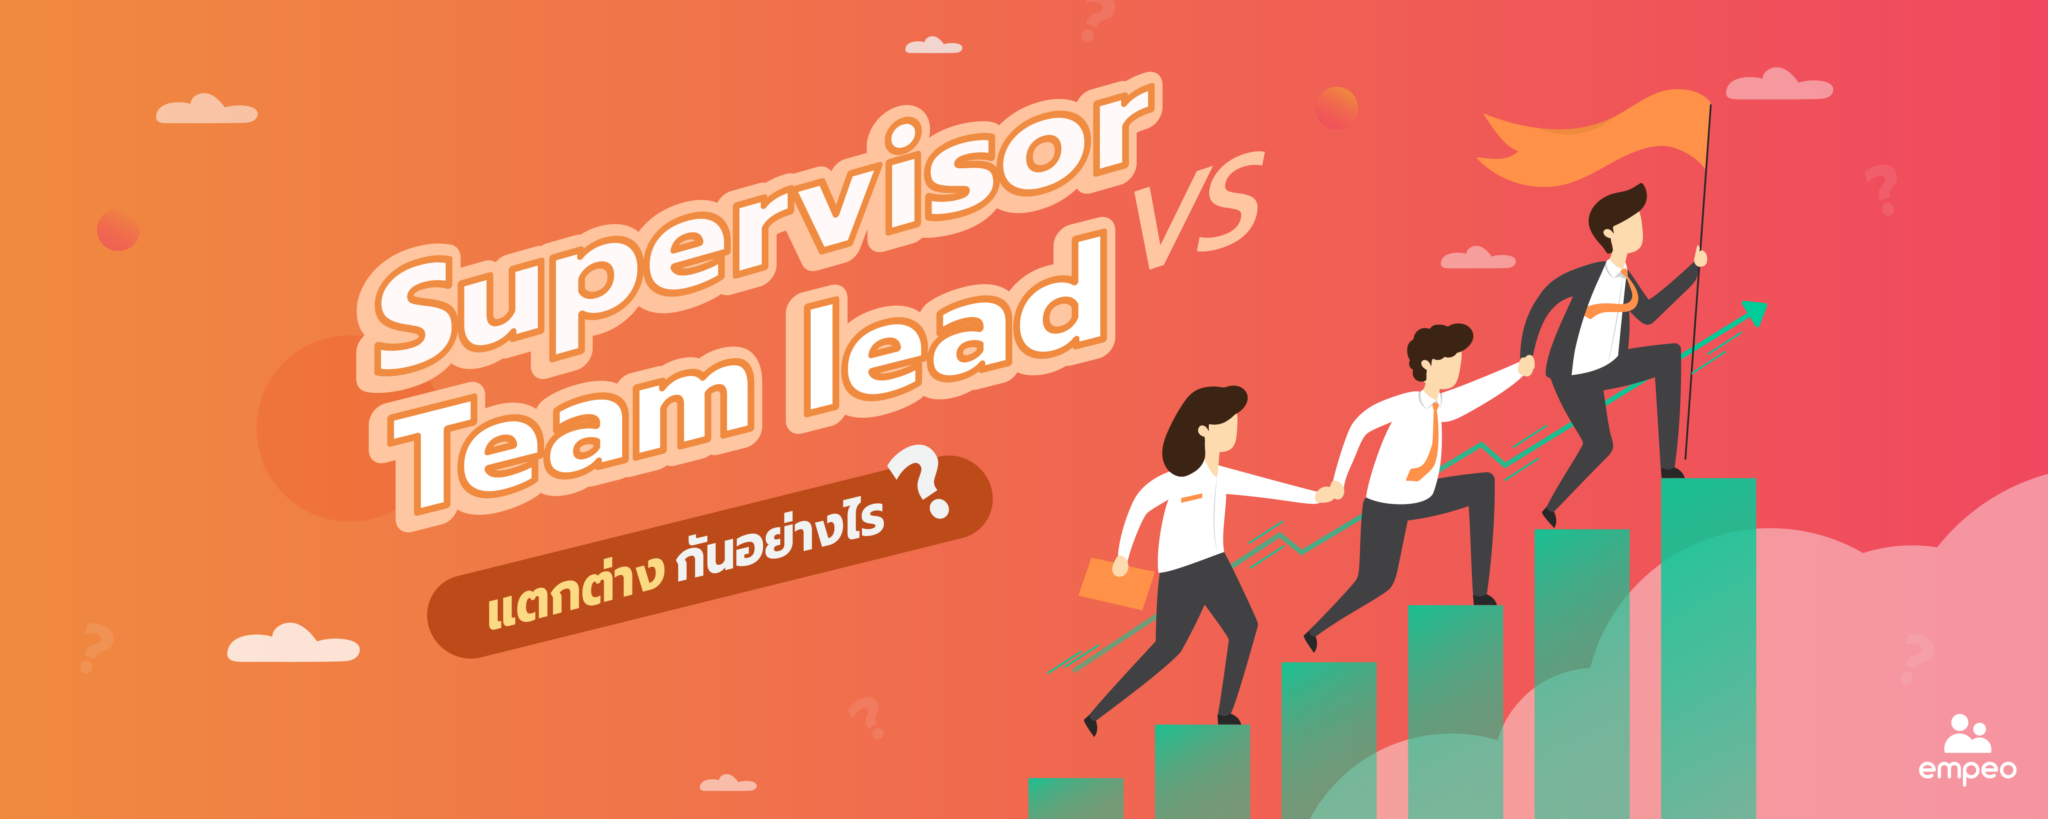 supervisor vs team lead blog image